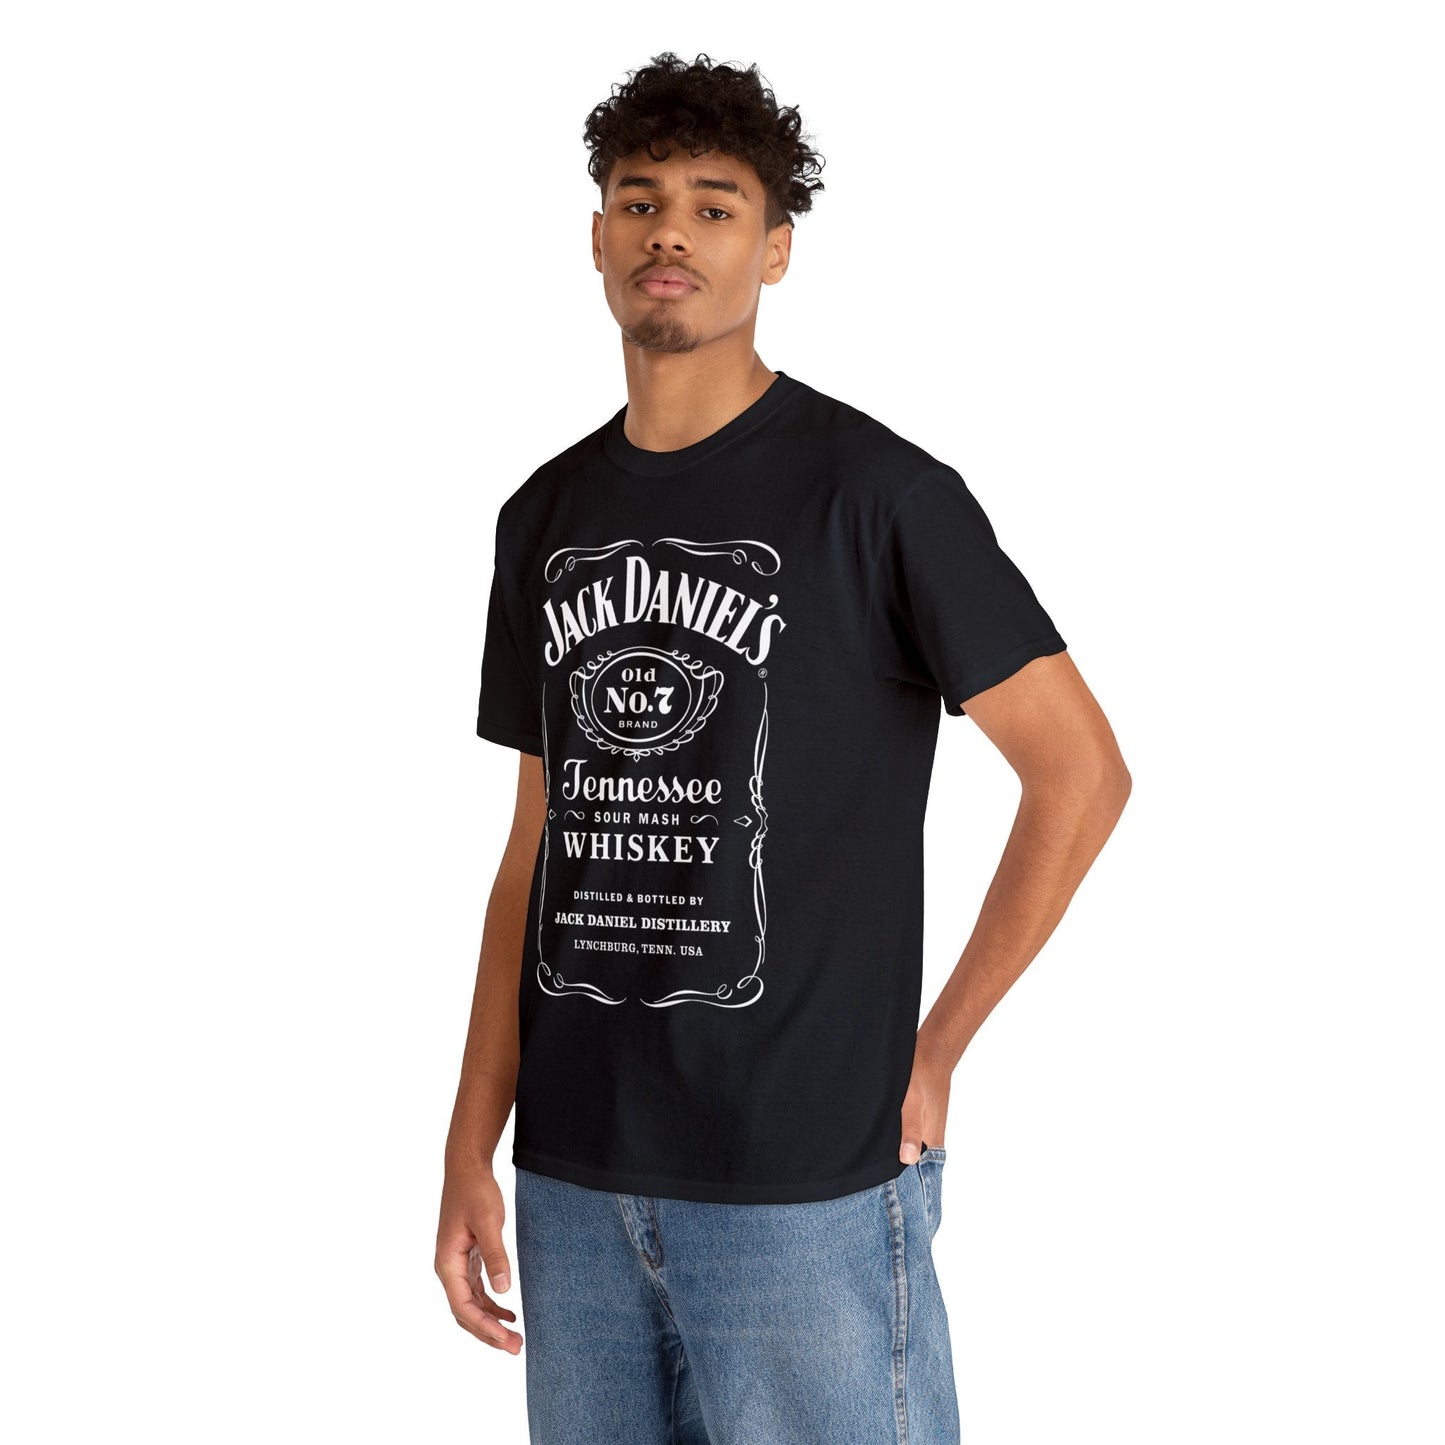 Jack Daniel's Old No. 7 Label Essential T-Shirt